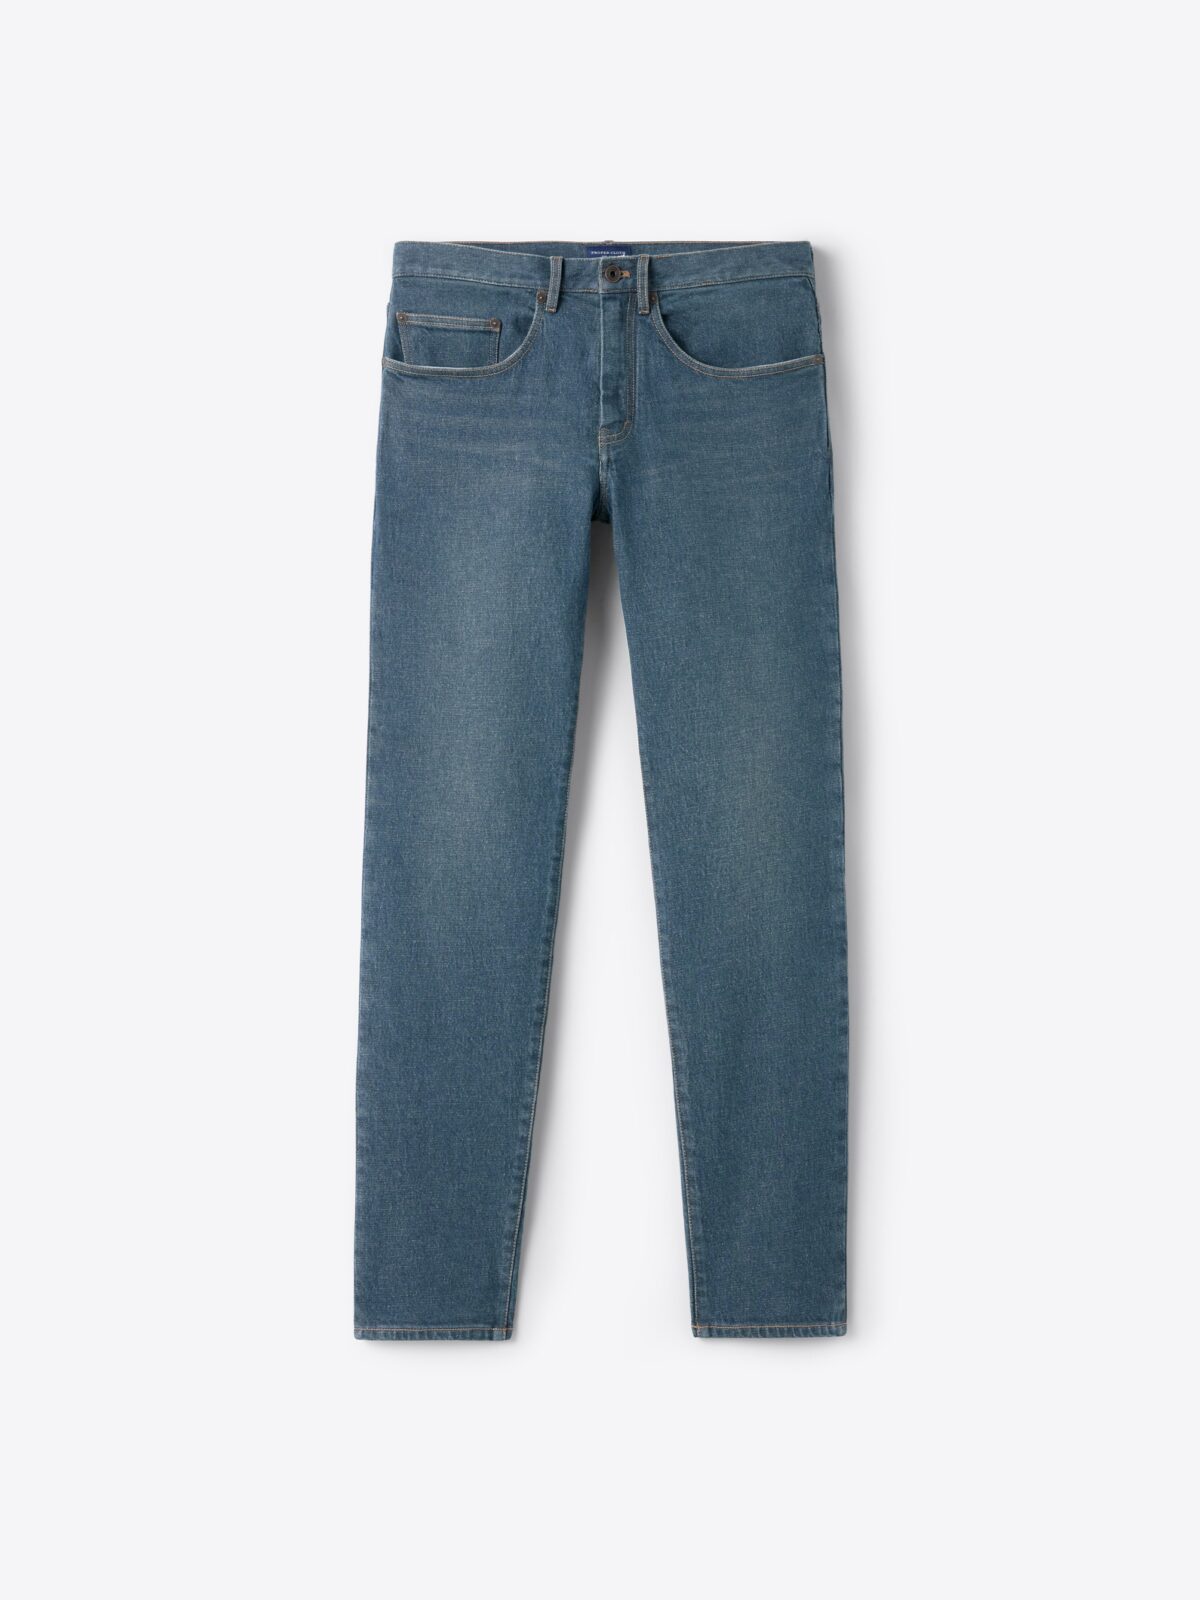 NEW Banana Republic Straight Leg Mens Jeans Dark Wash Denim Size 33 X 34 |  eBay